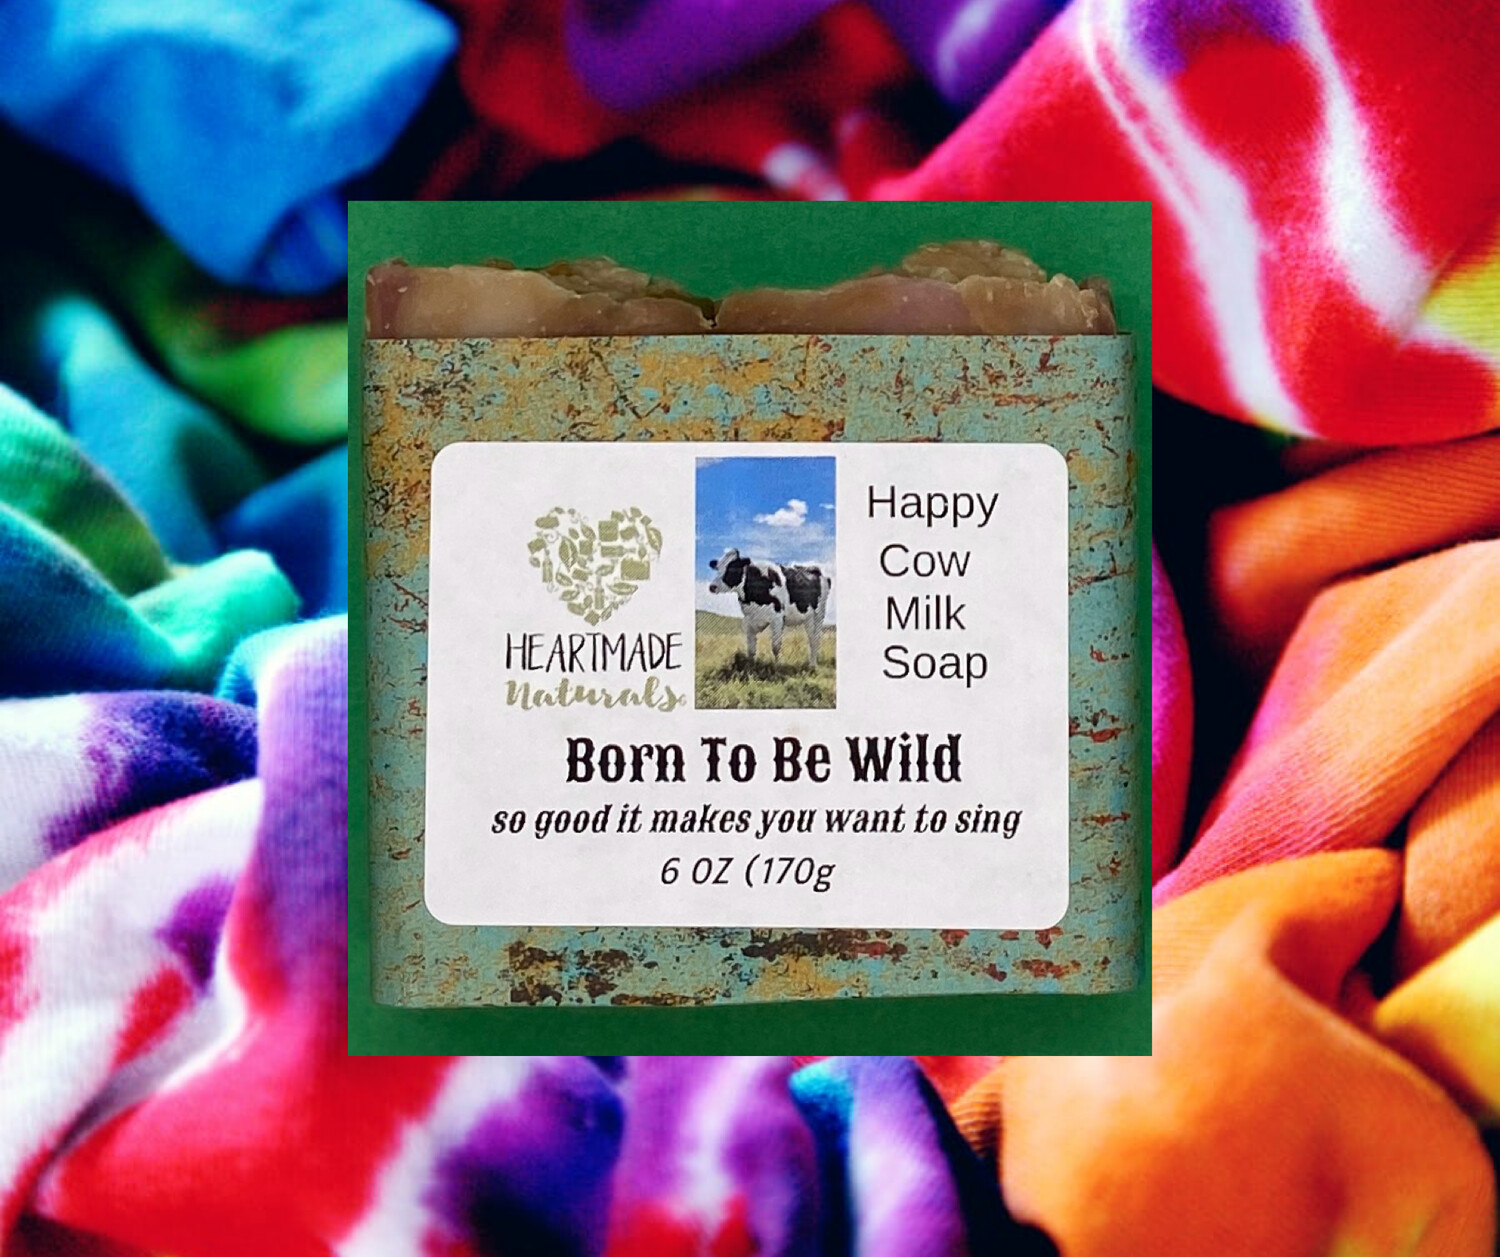 Born to be wild happy cow milk soap